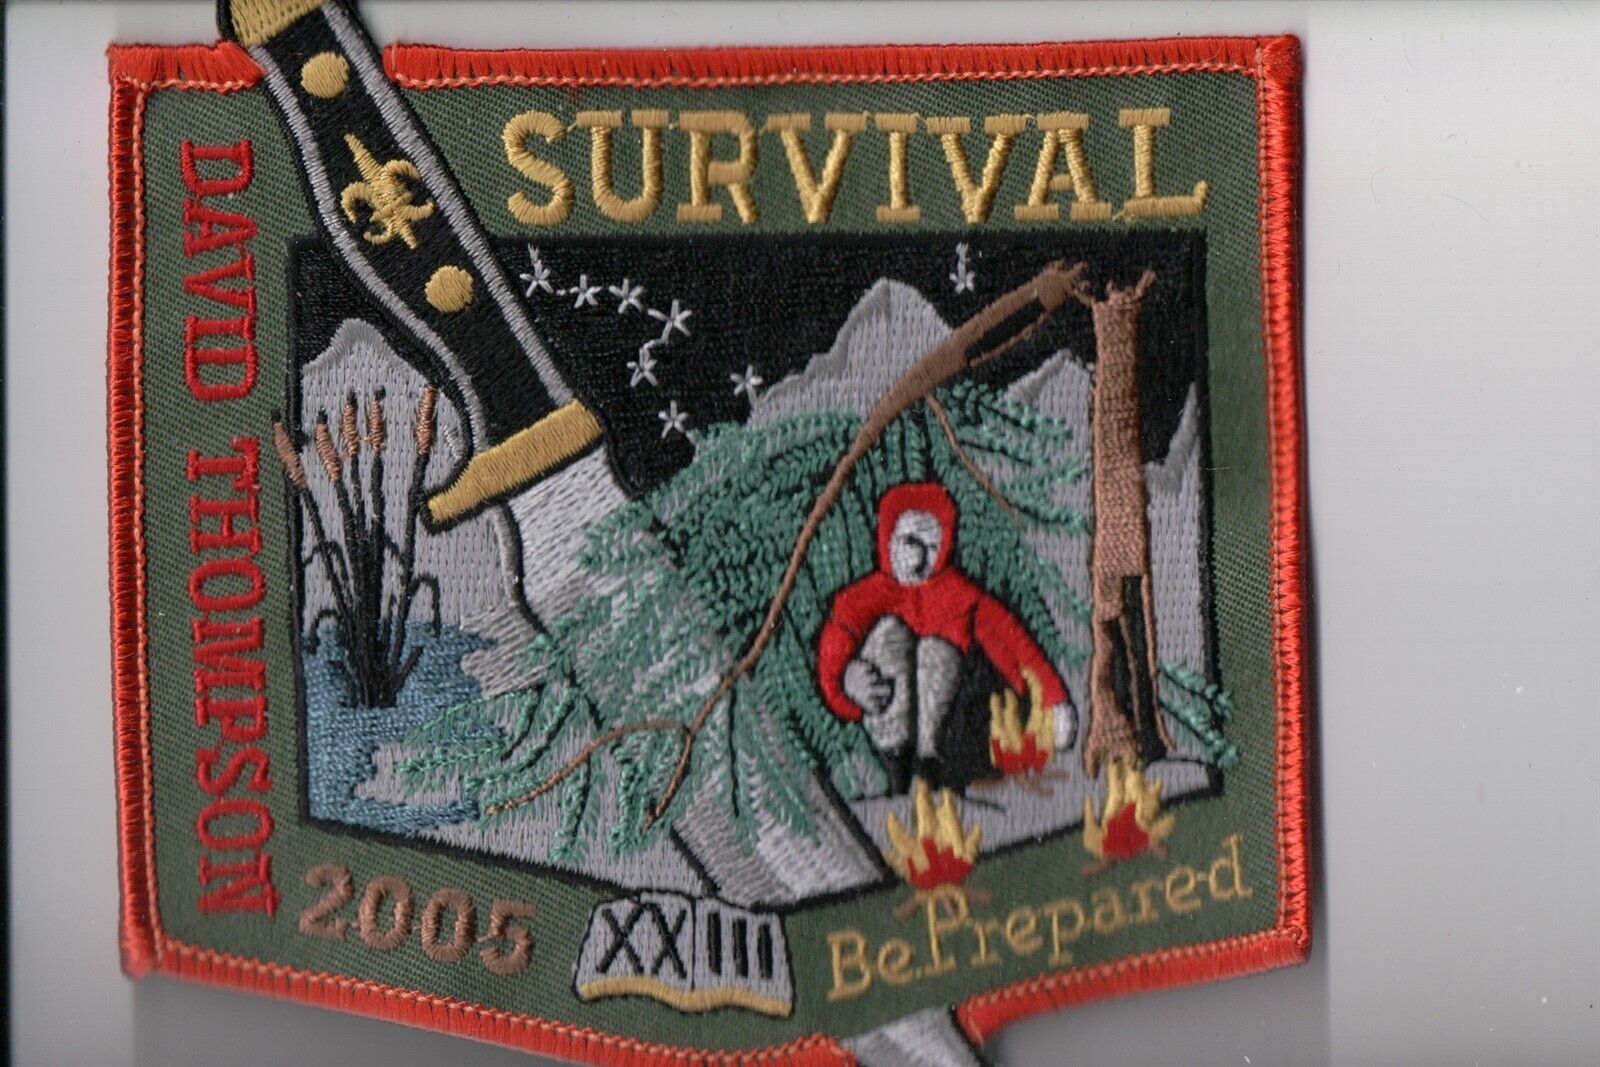 2006 David Thompson Survival patch